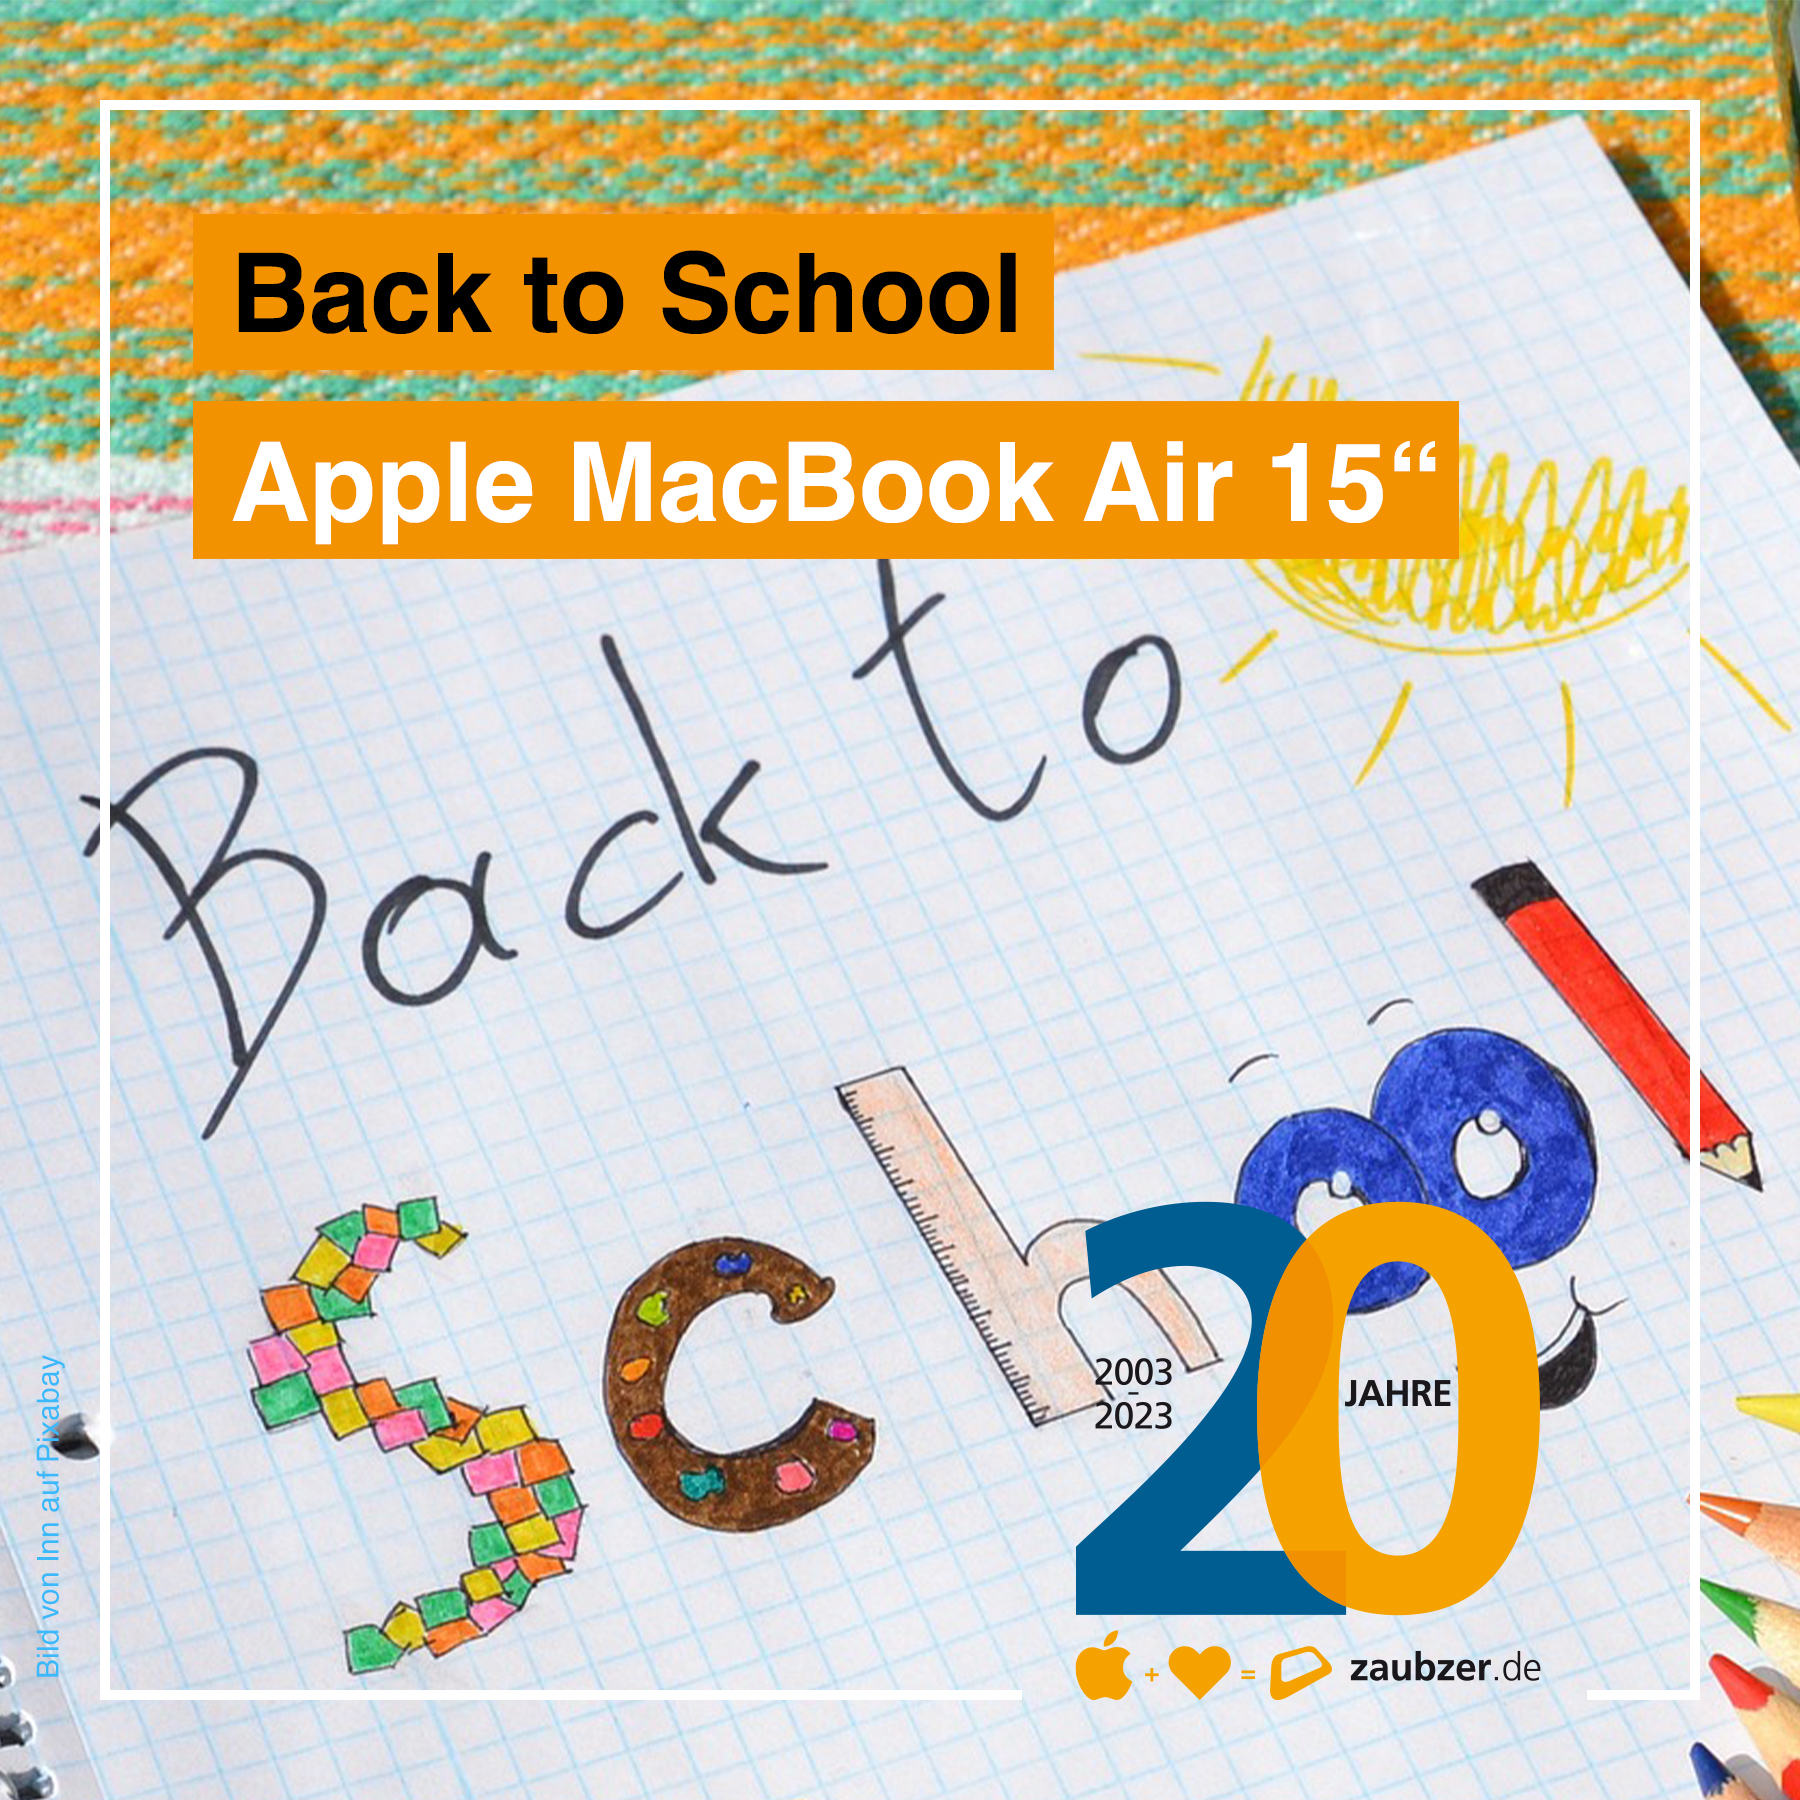 Back to School ´23 - zaubzer.de - Mannheim - Apple Mack Book Air 15"